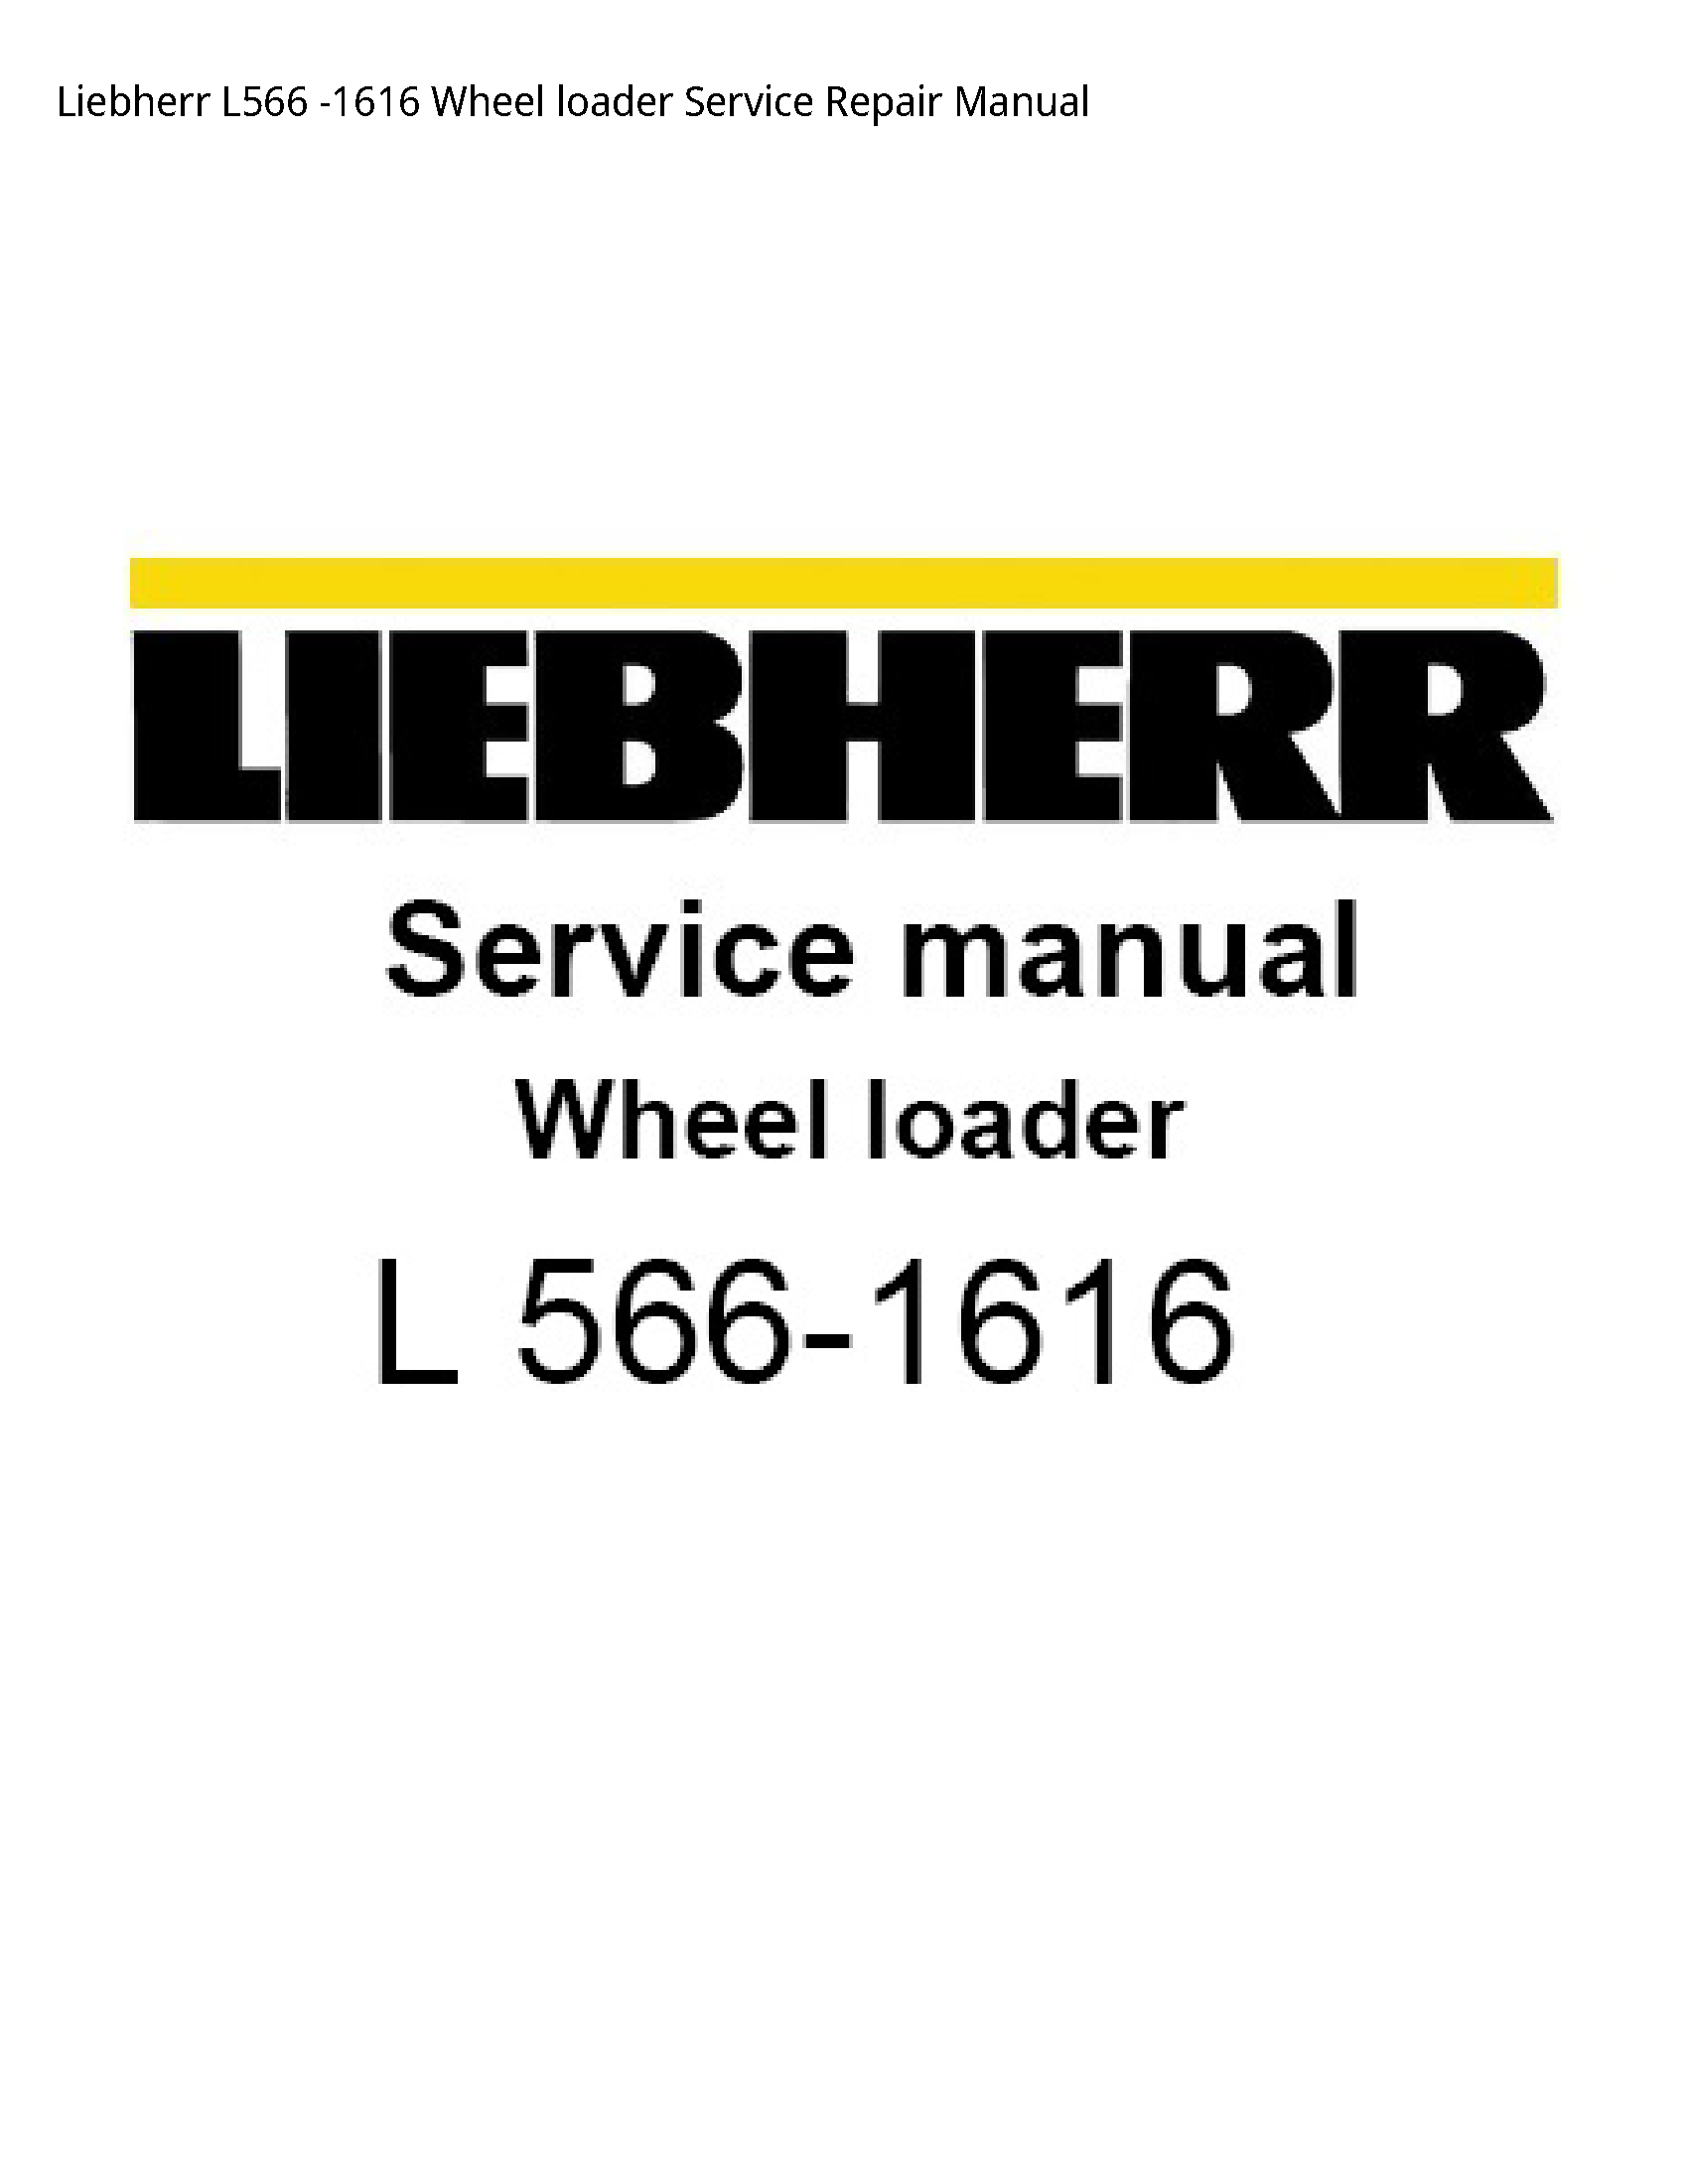 Liebherr L566 Wheel loader manual